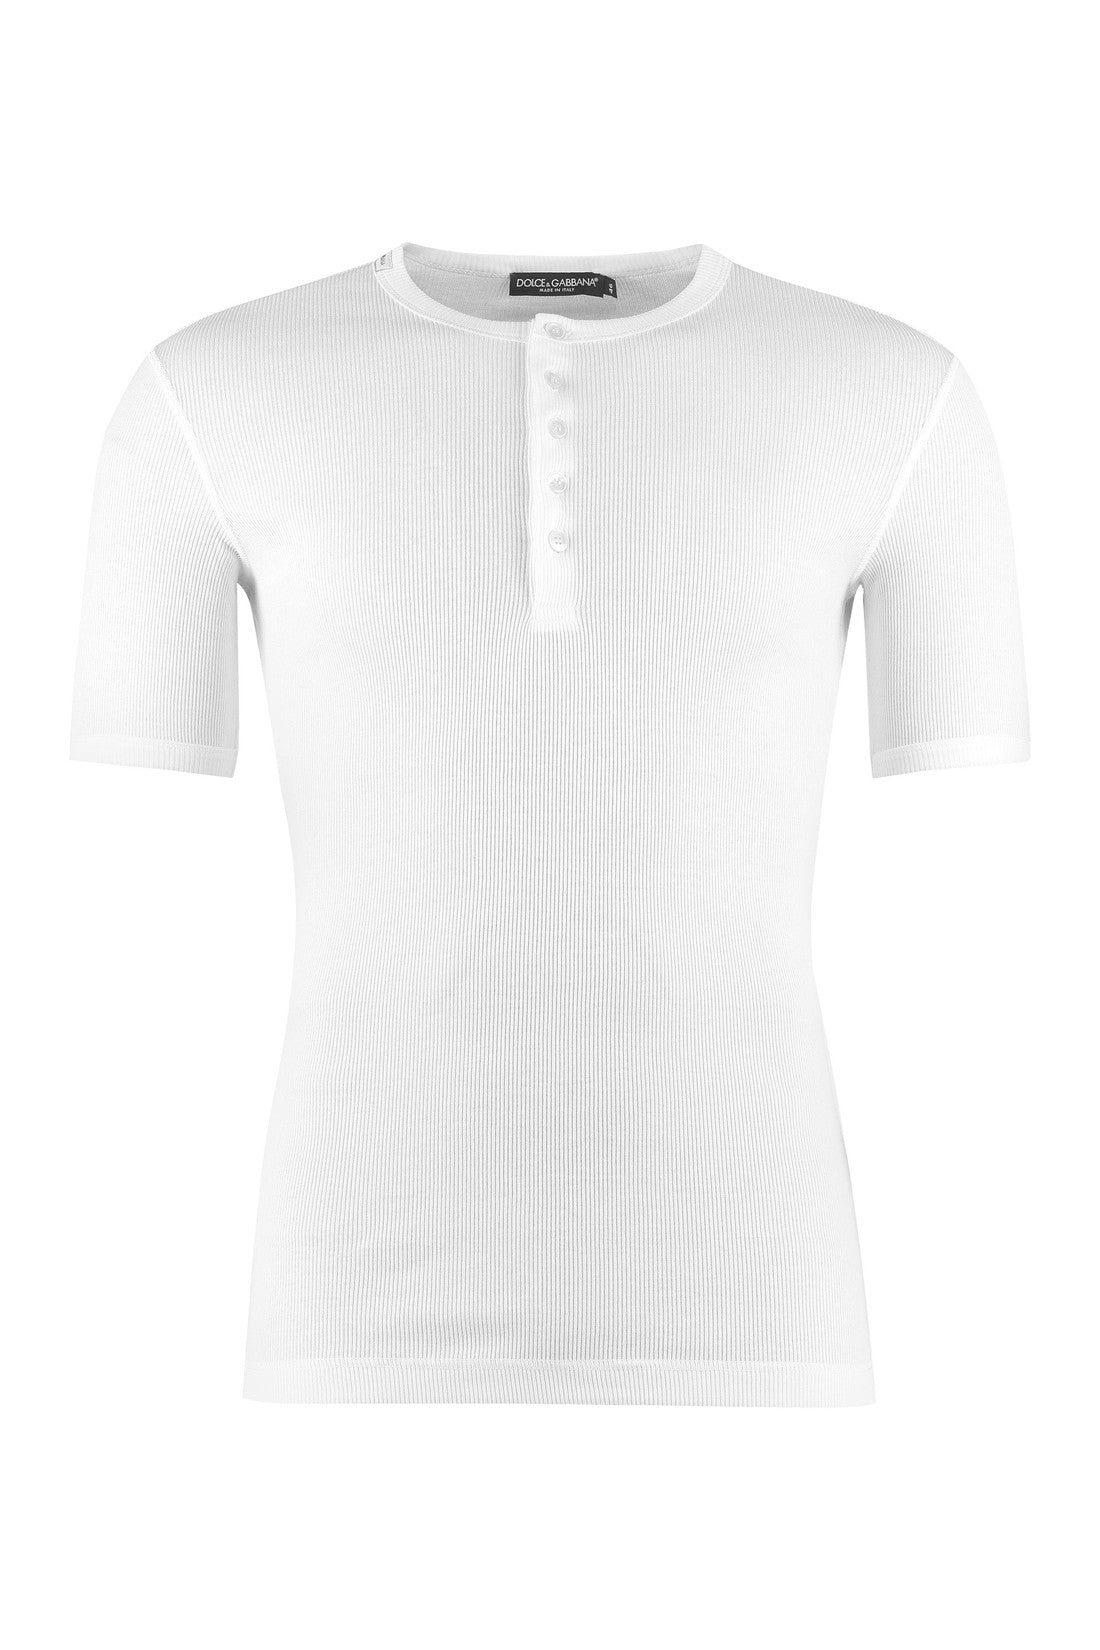 Dolce & Gabbana-OUTLET-SALE-Ribbed cotton crew-neck t-shirt-ARCHIVIST